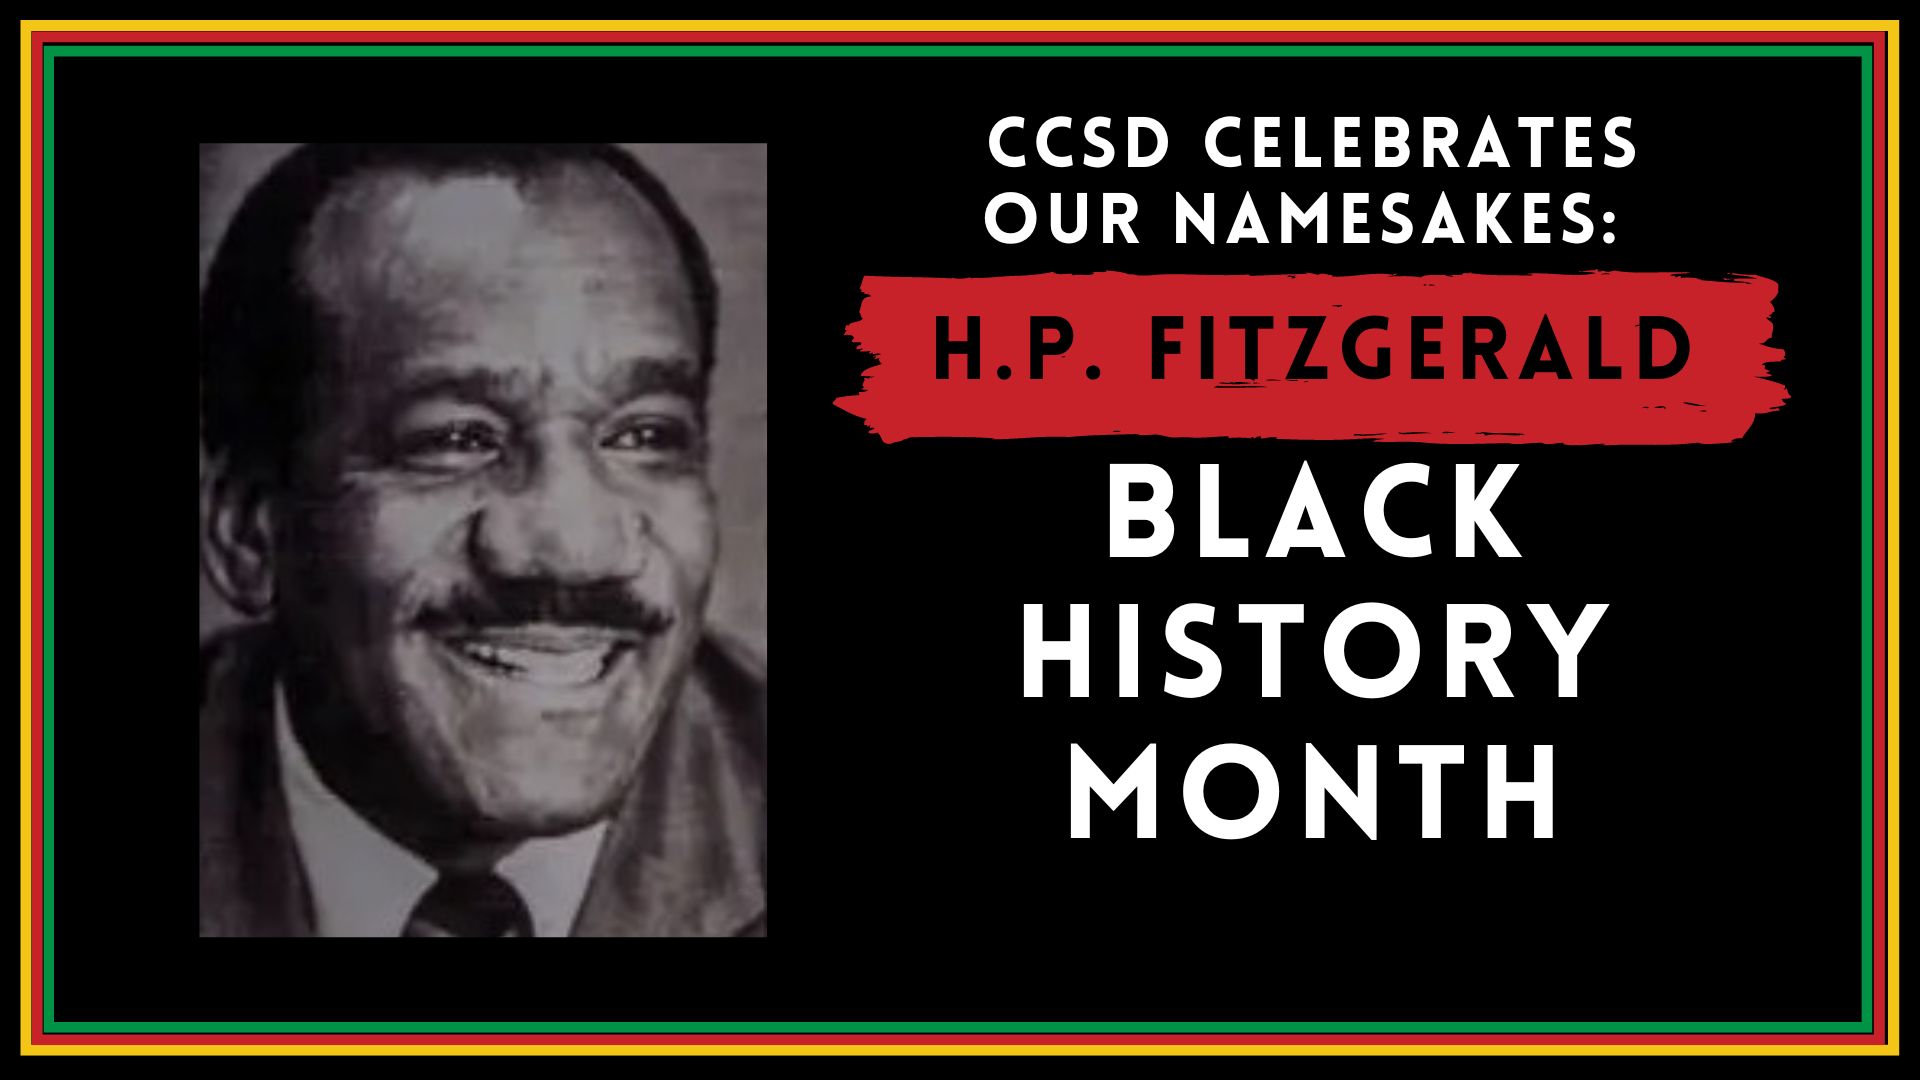 Celebrating CCSD leaders: H.P. Fitzgerald